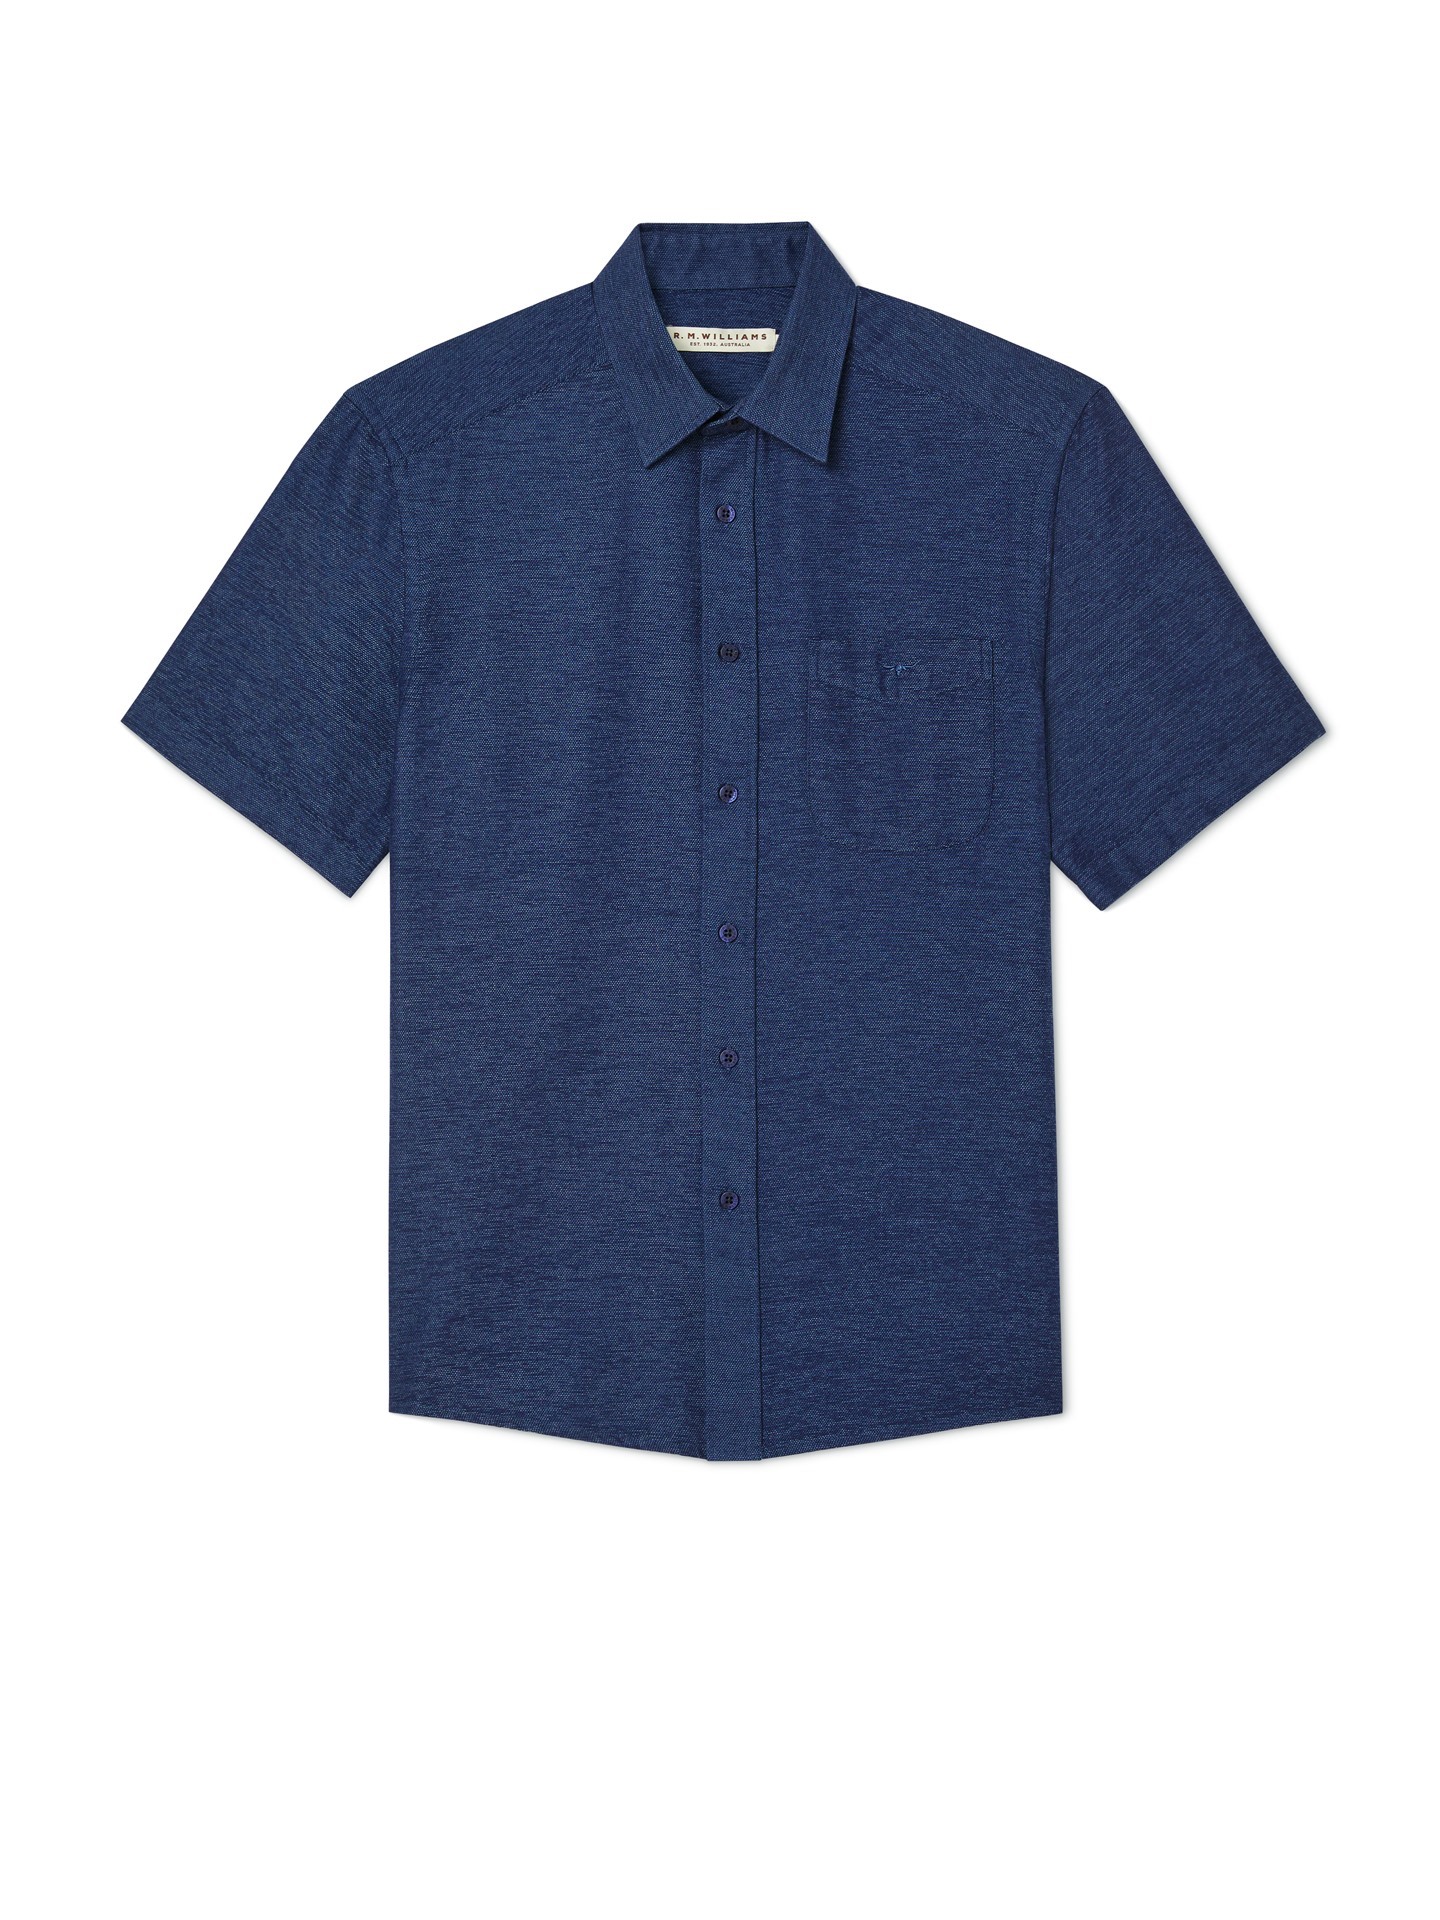 RM Williams Hervey Shirt - Blue | Port Phillip Shop